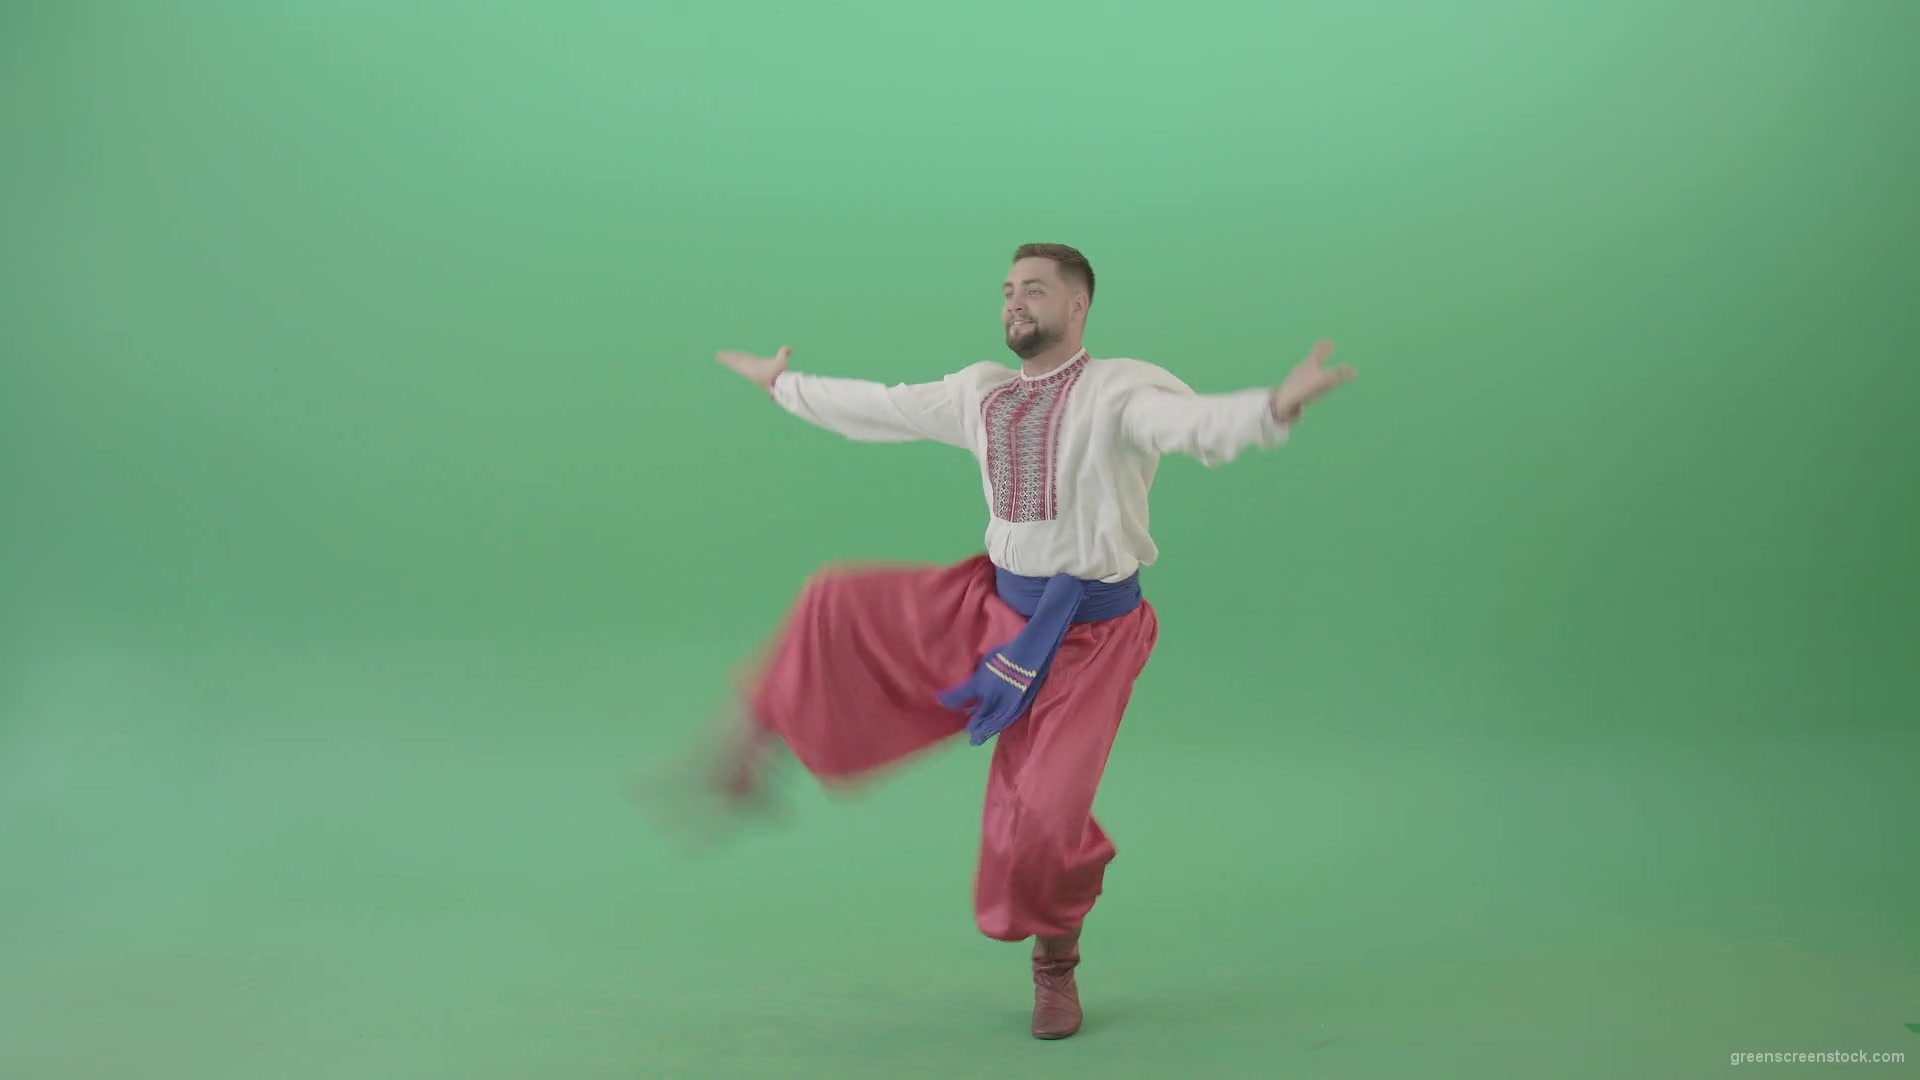 Cossack-Dance-Hopak-by-Ukrainian-Man-isolated-on-Green-Screen-4K-Video-Footage-1920_008 Green Screen Stock